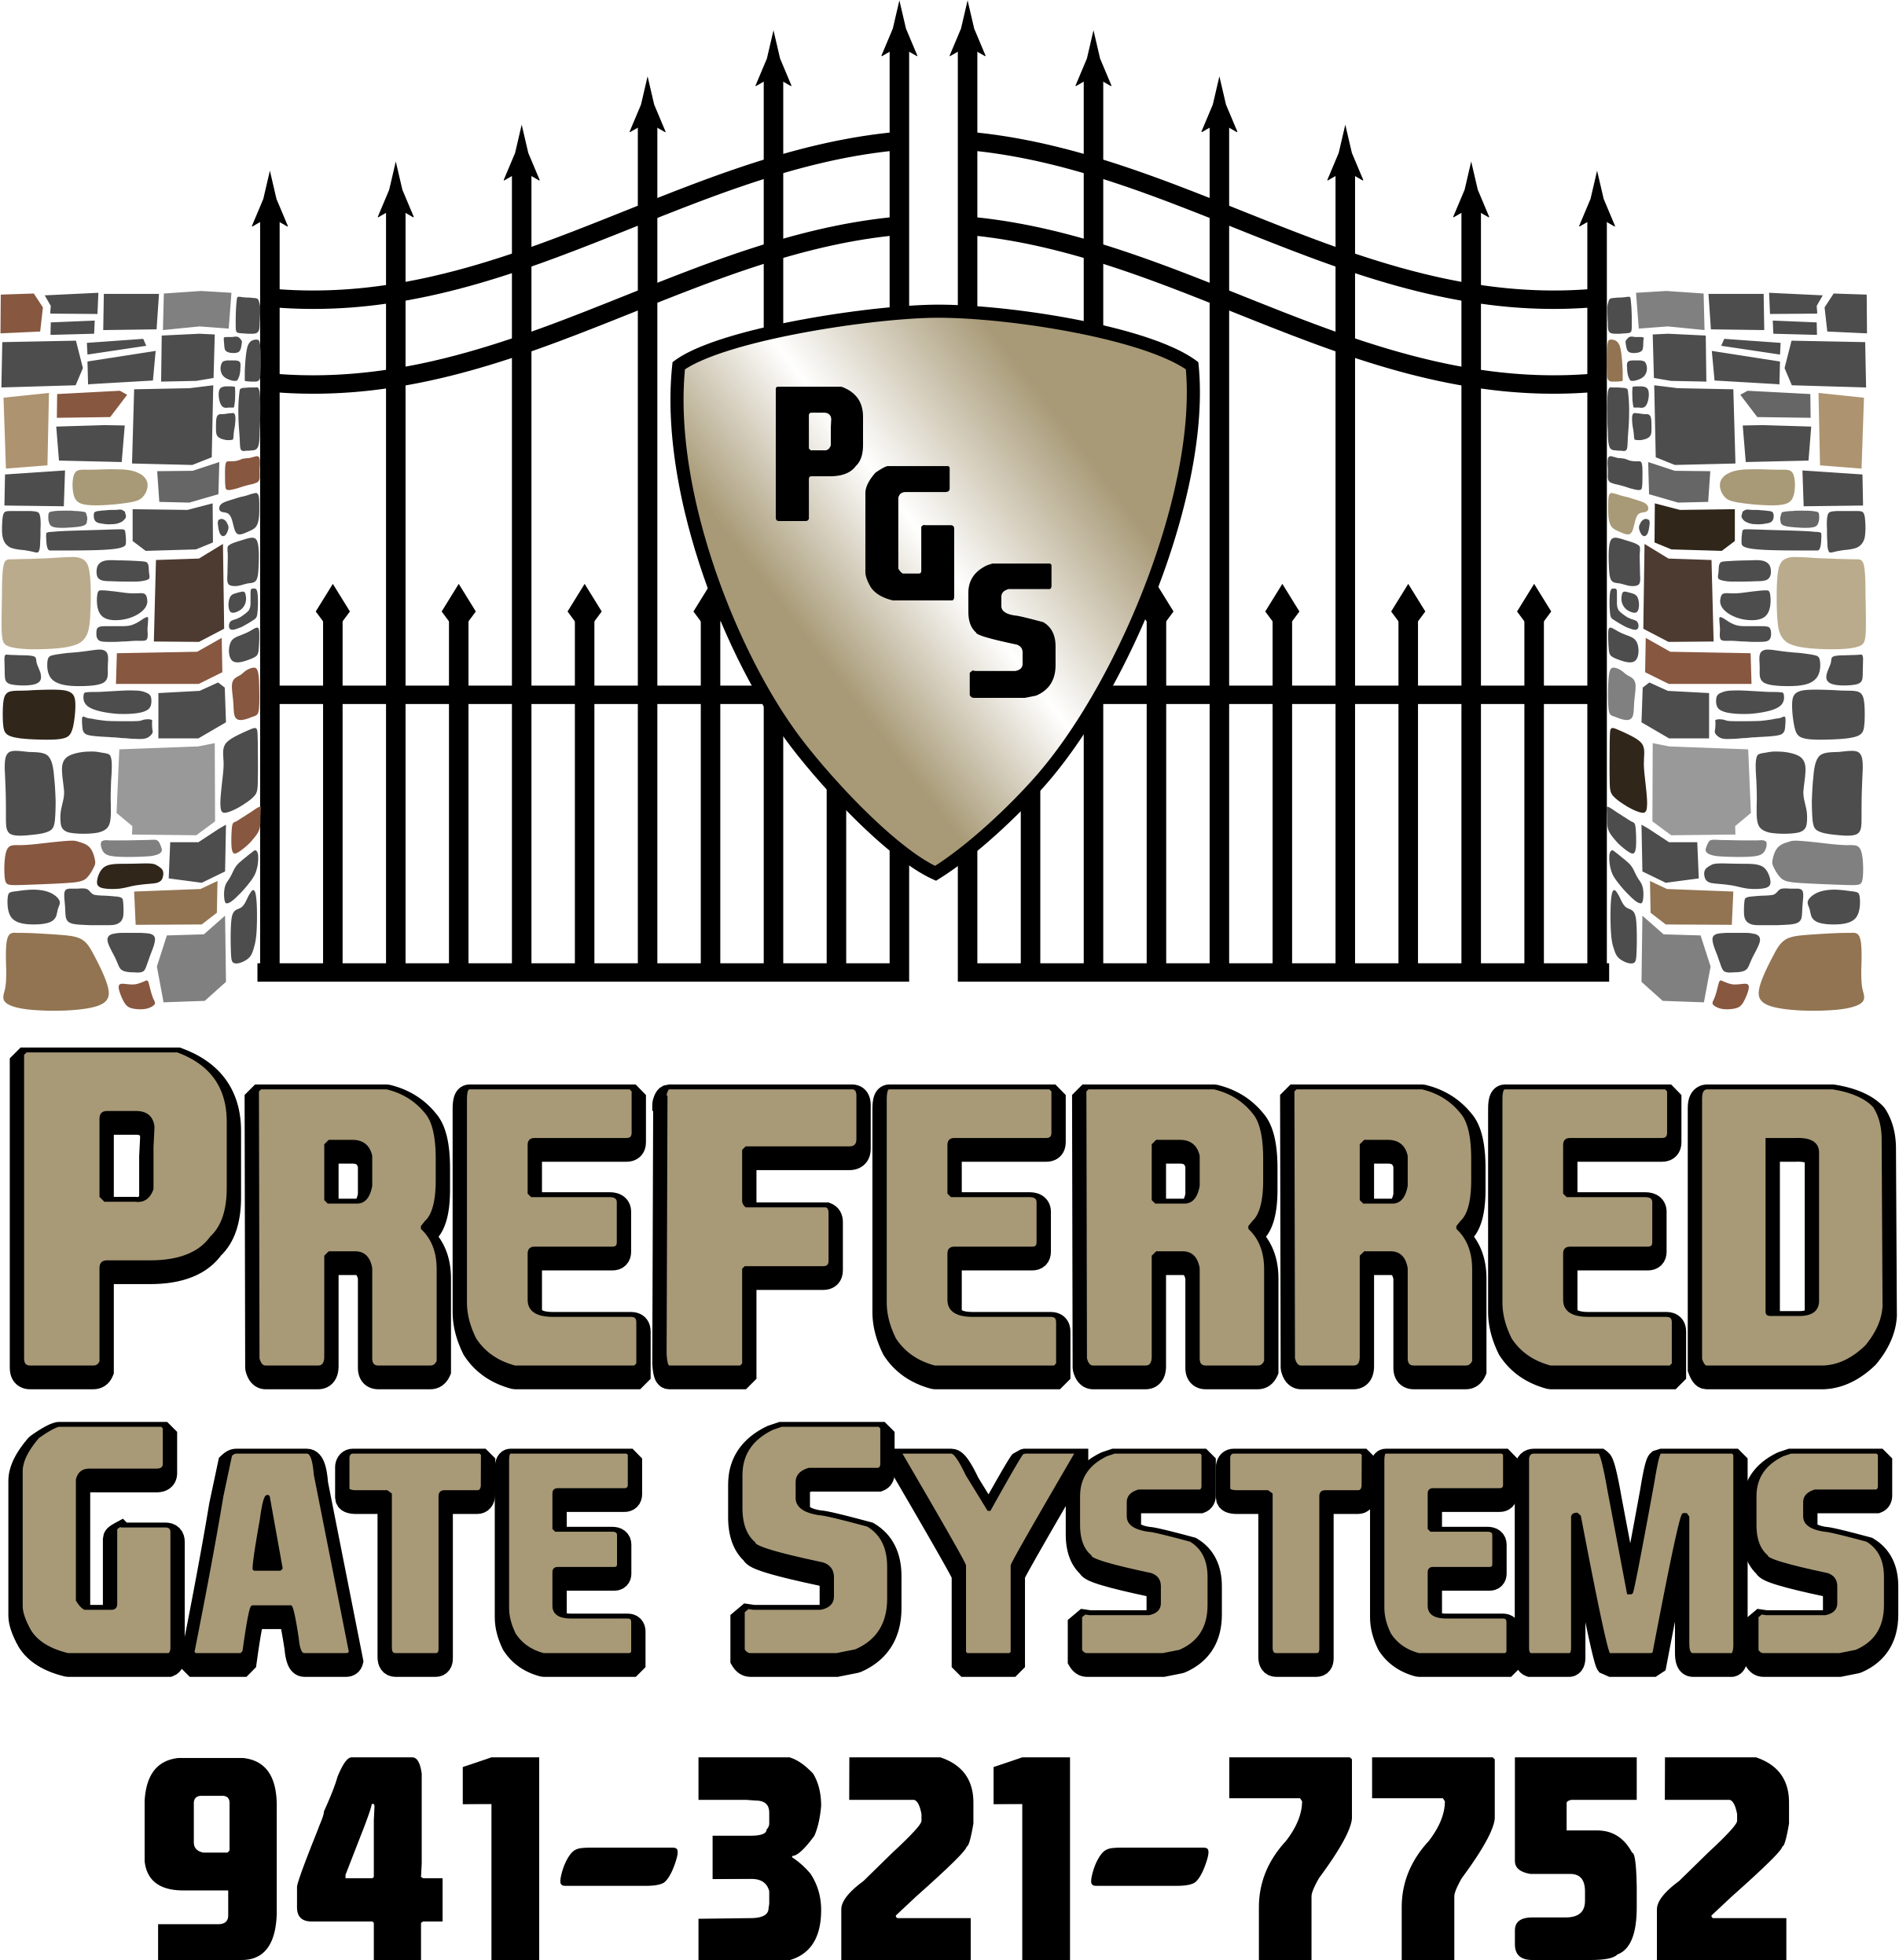 Preferred Gate Systems, Inc Logo